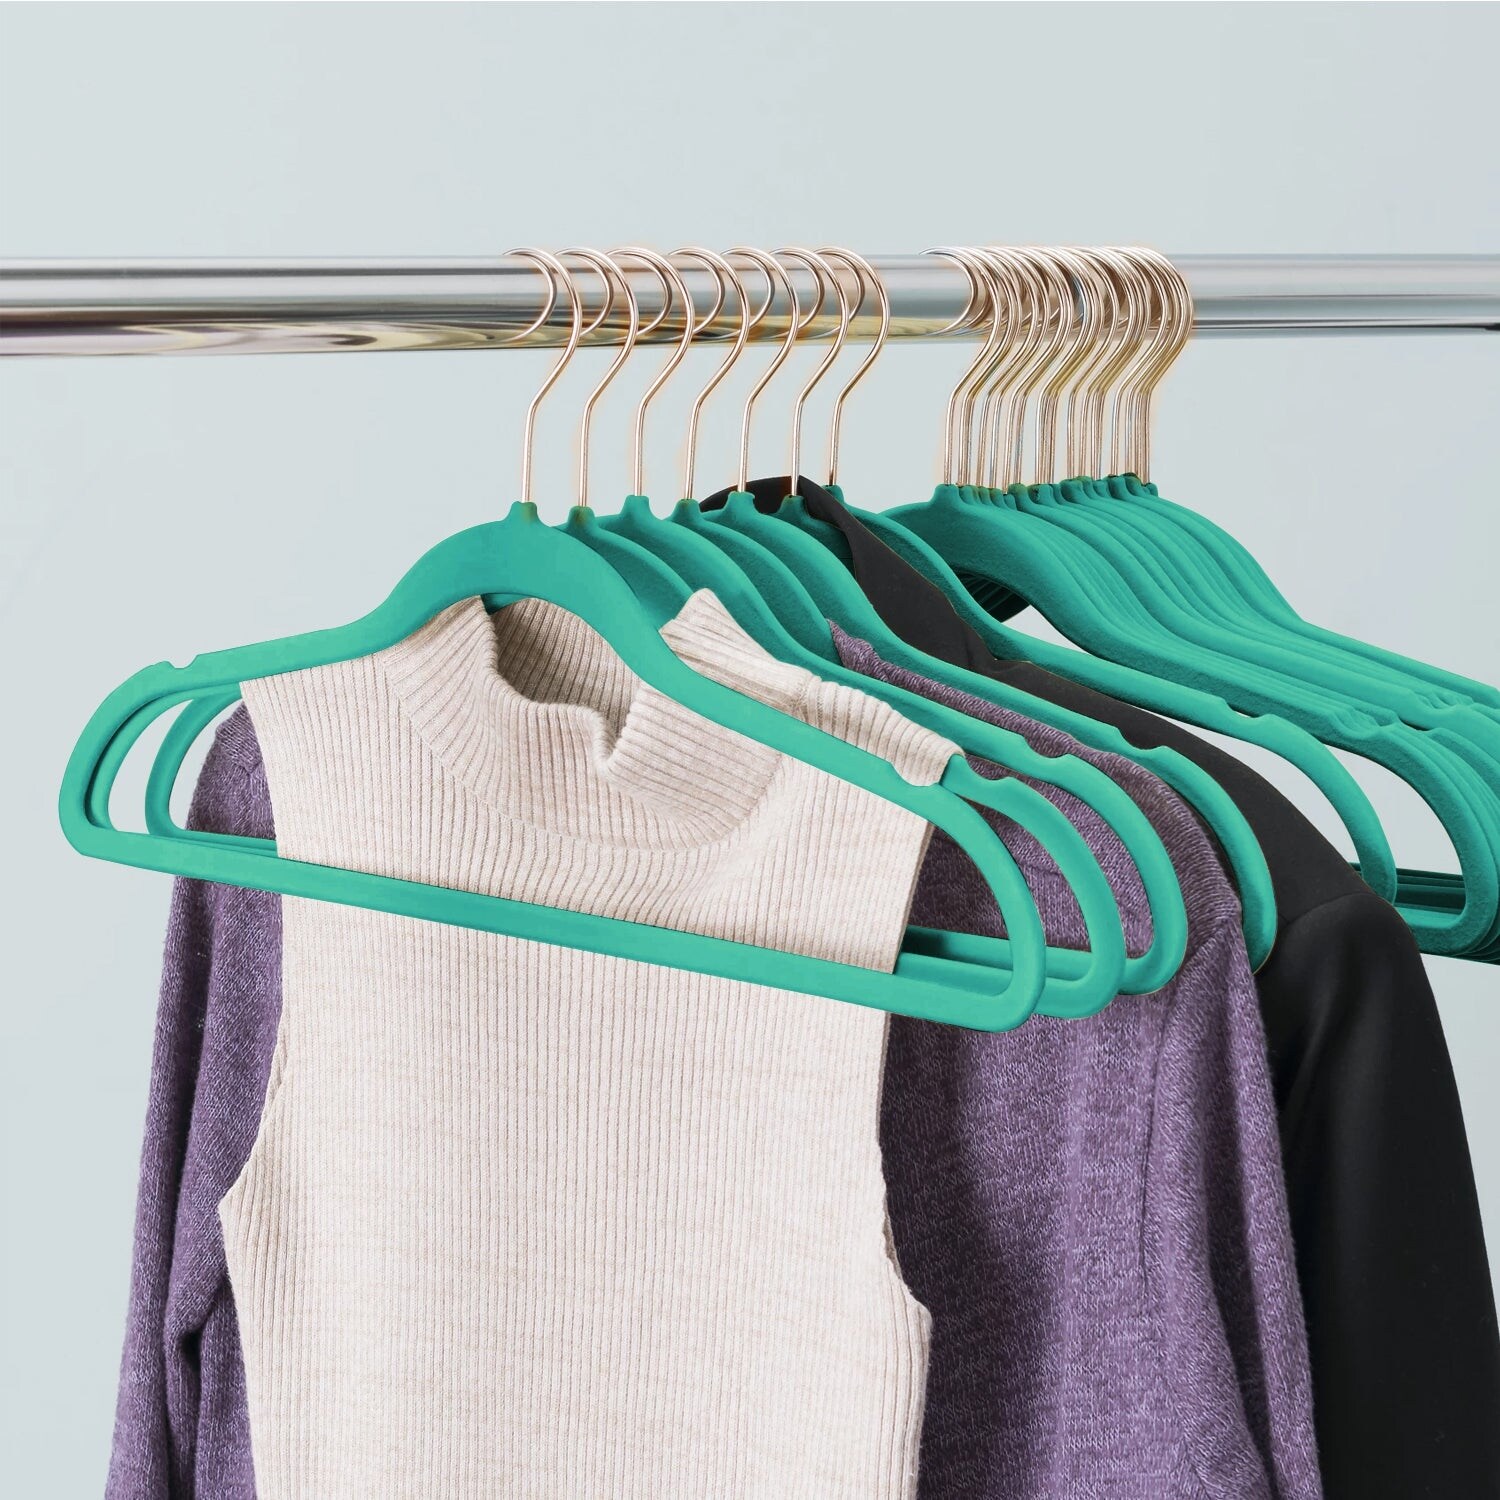 HOUSE DAY Mint Green Velvet Hangers 60 Pack, Premium Clothes